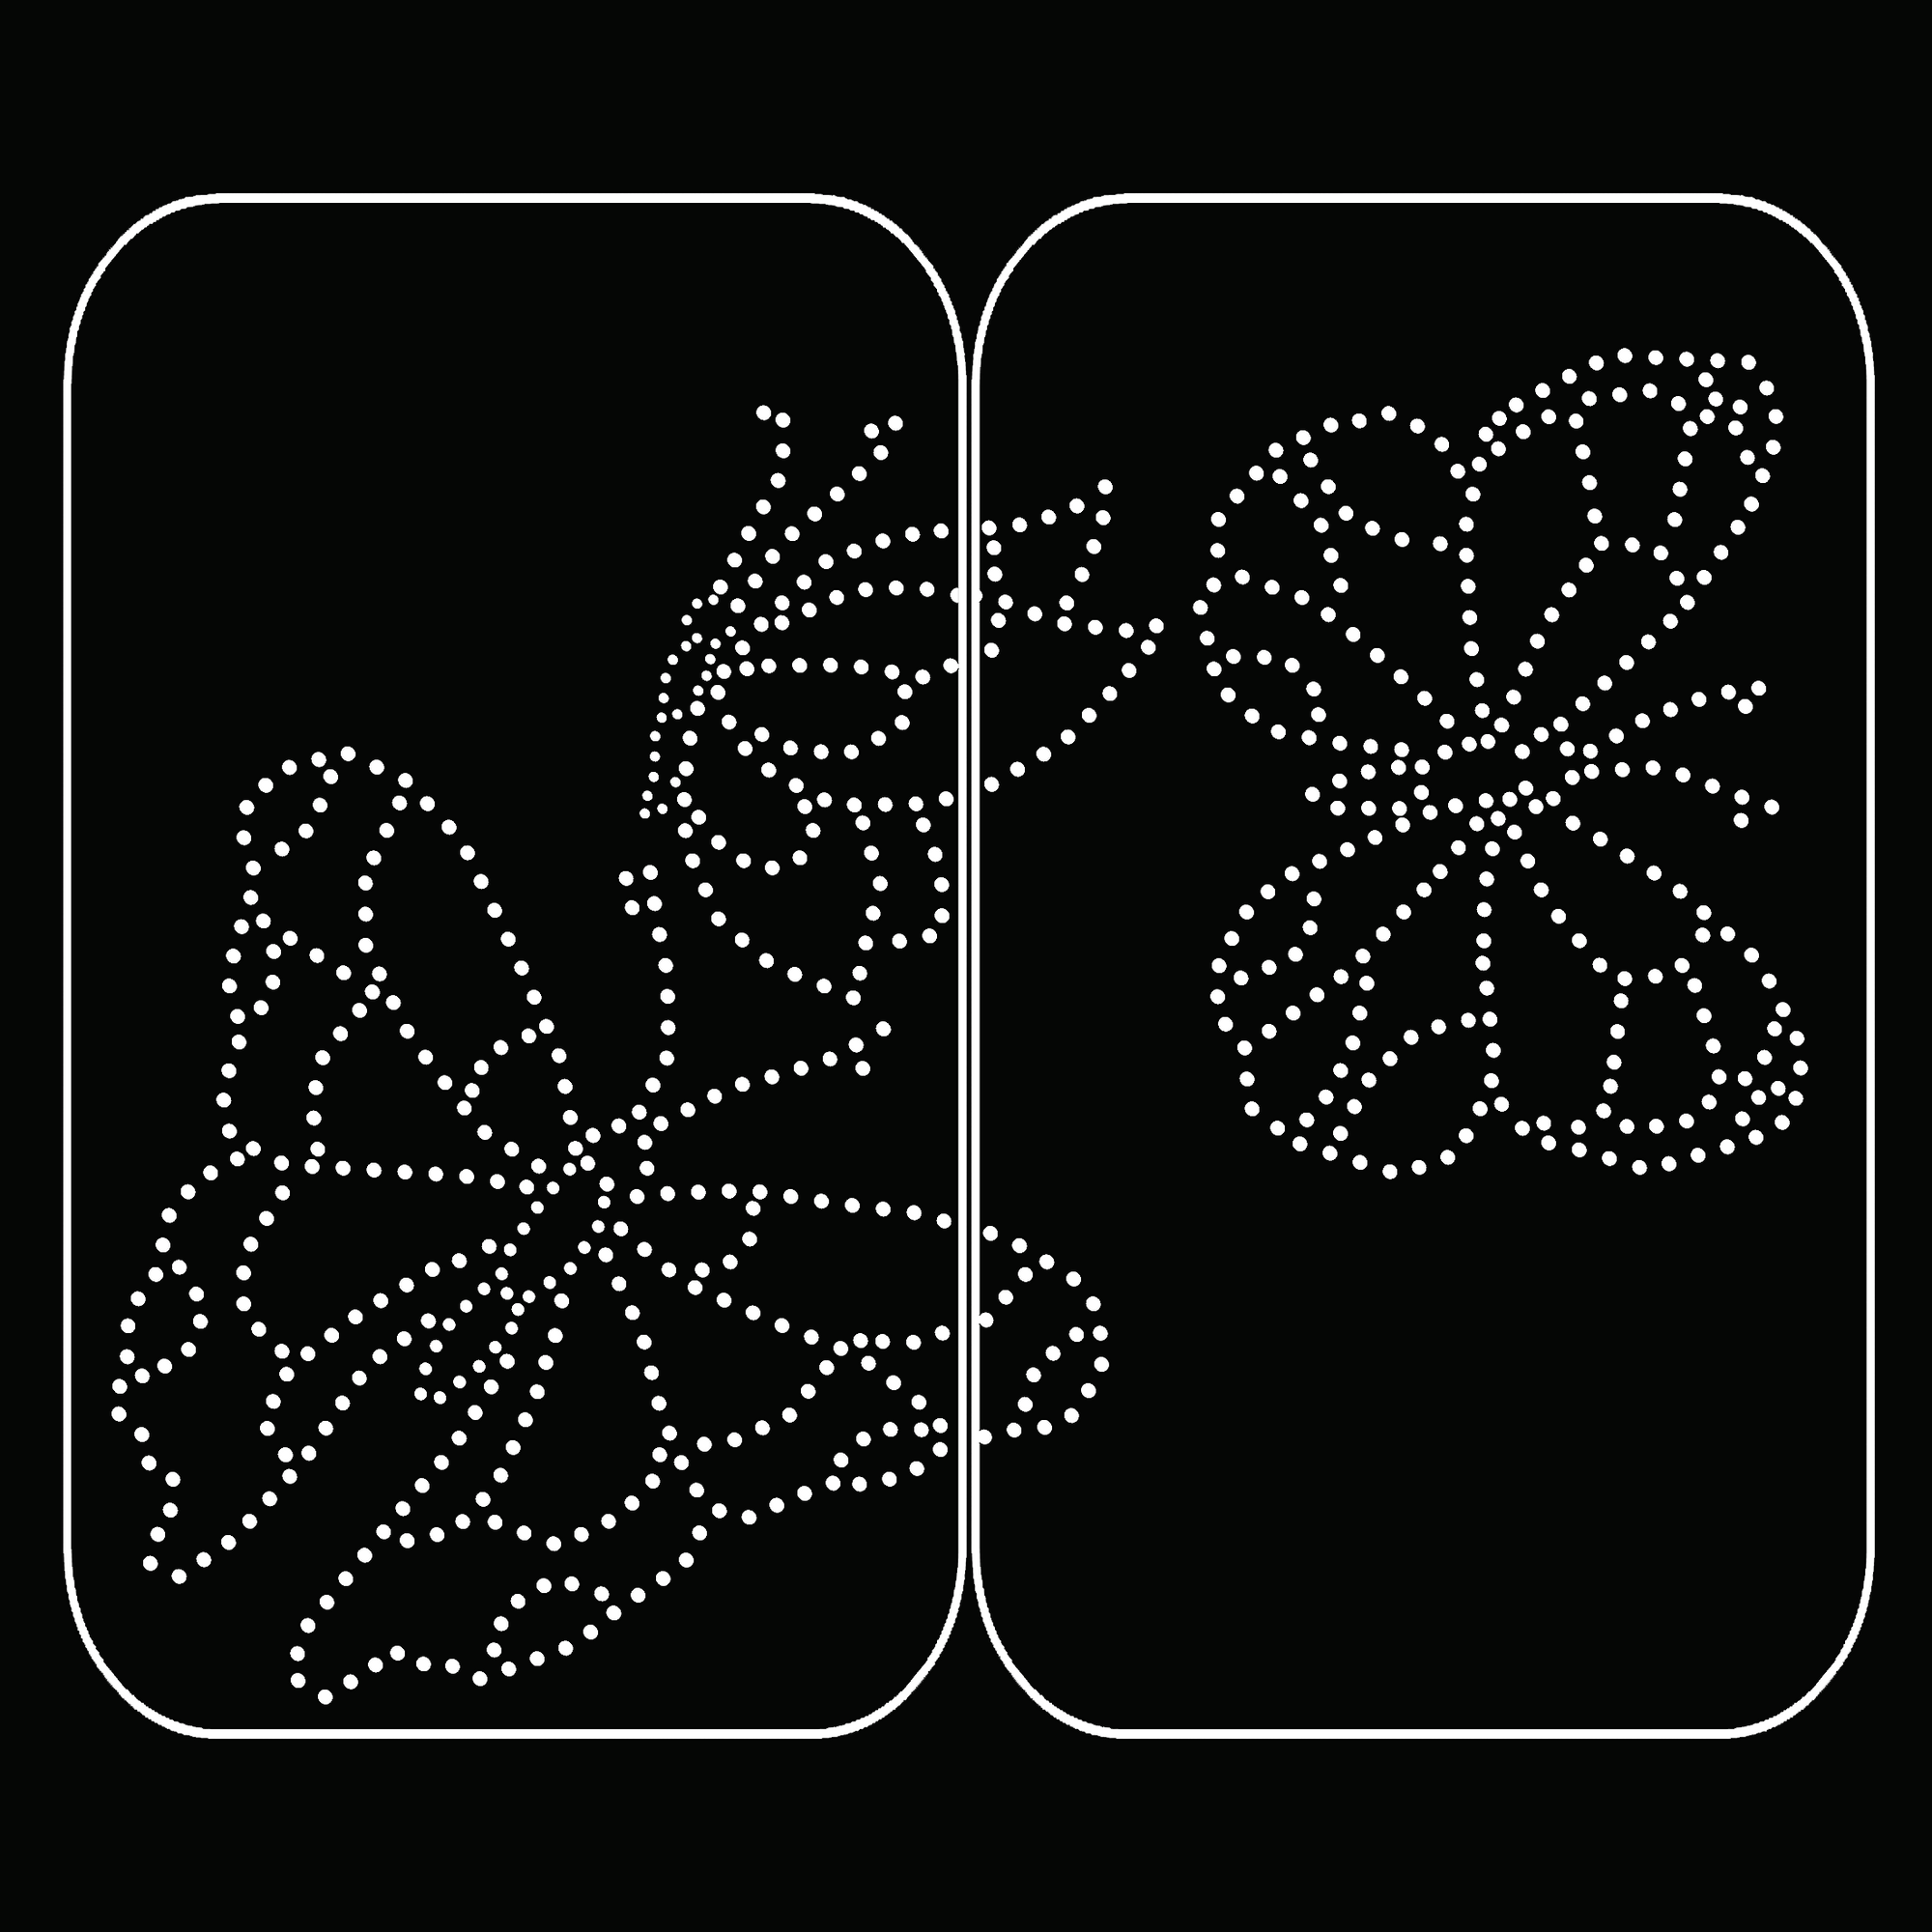 13-00009 butterfly eyes stencil - iStencils